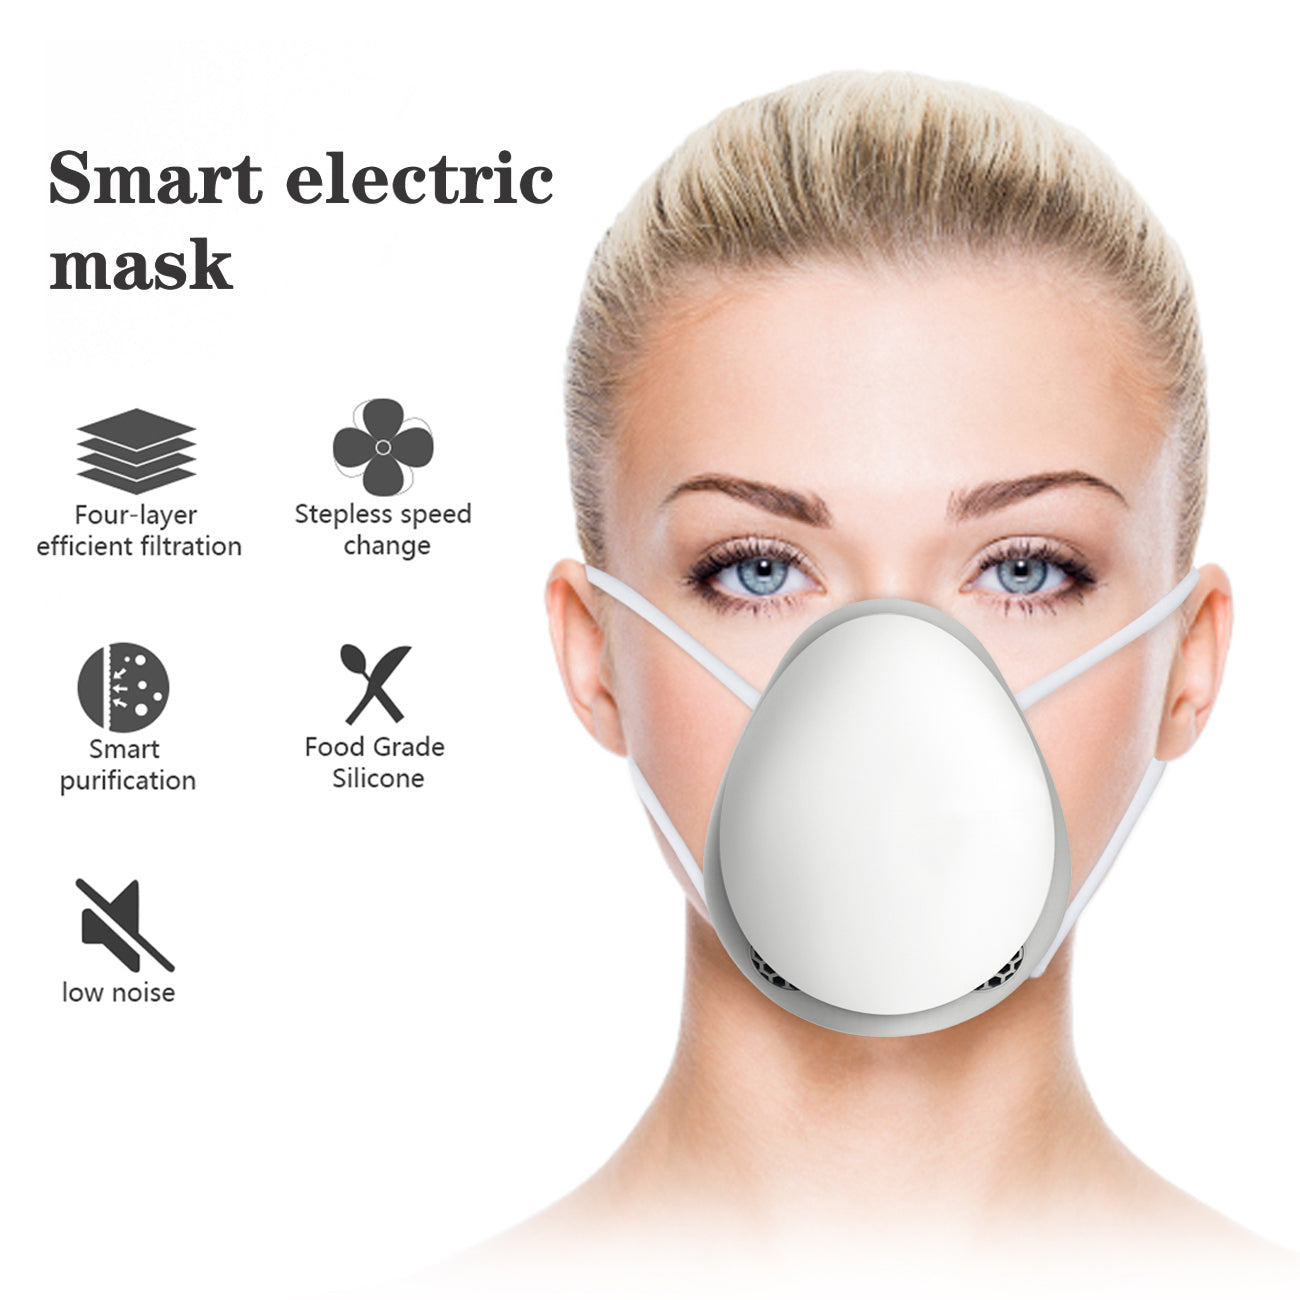 Mask Smart Electric 4-Layer Efficient Filtration